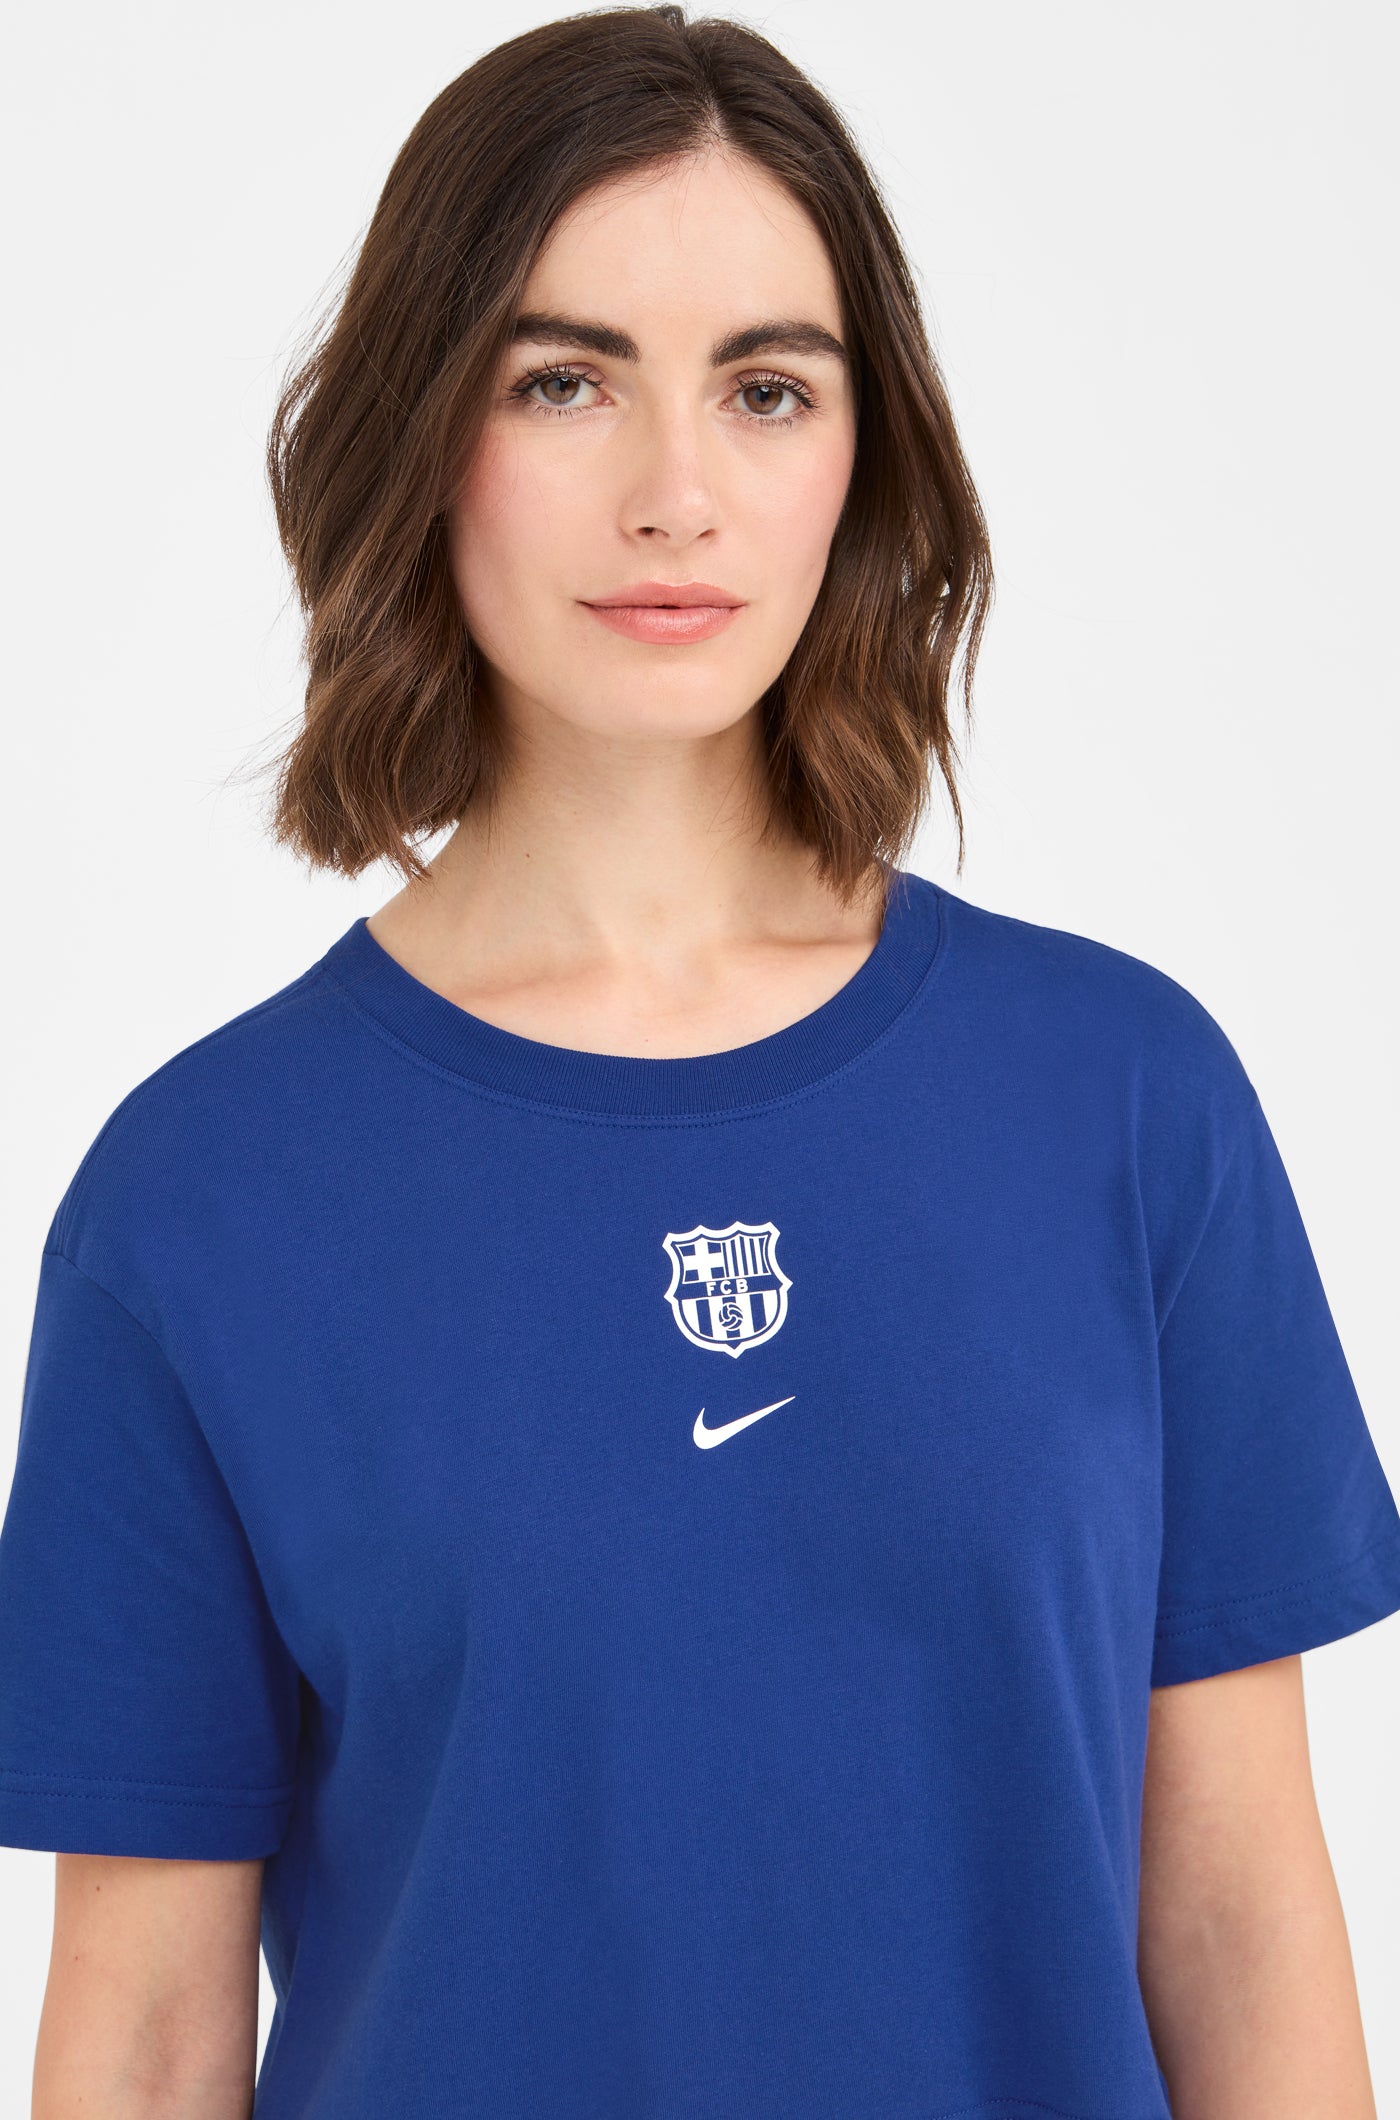 Cropped Shirt, Medium Blue